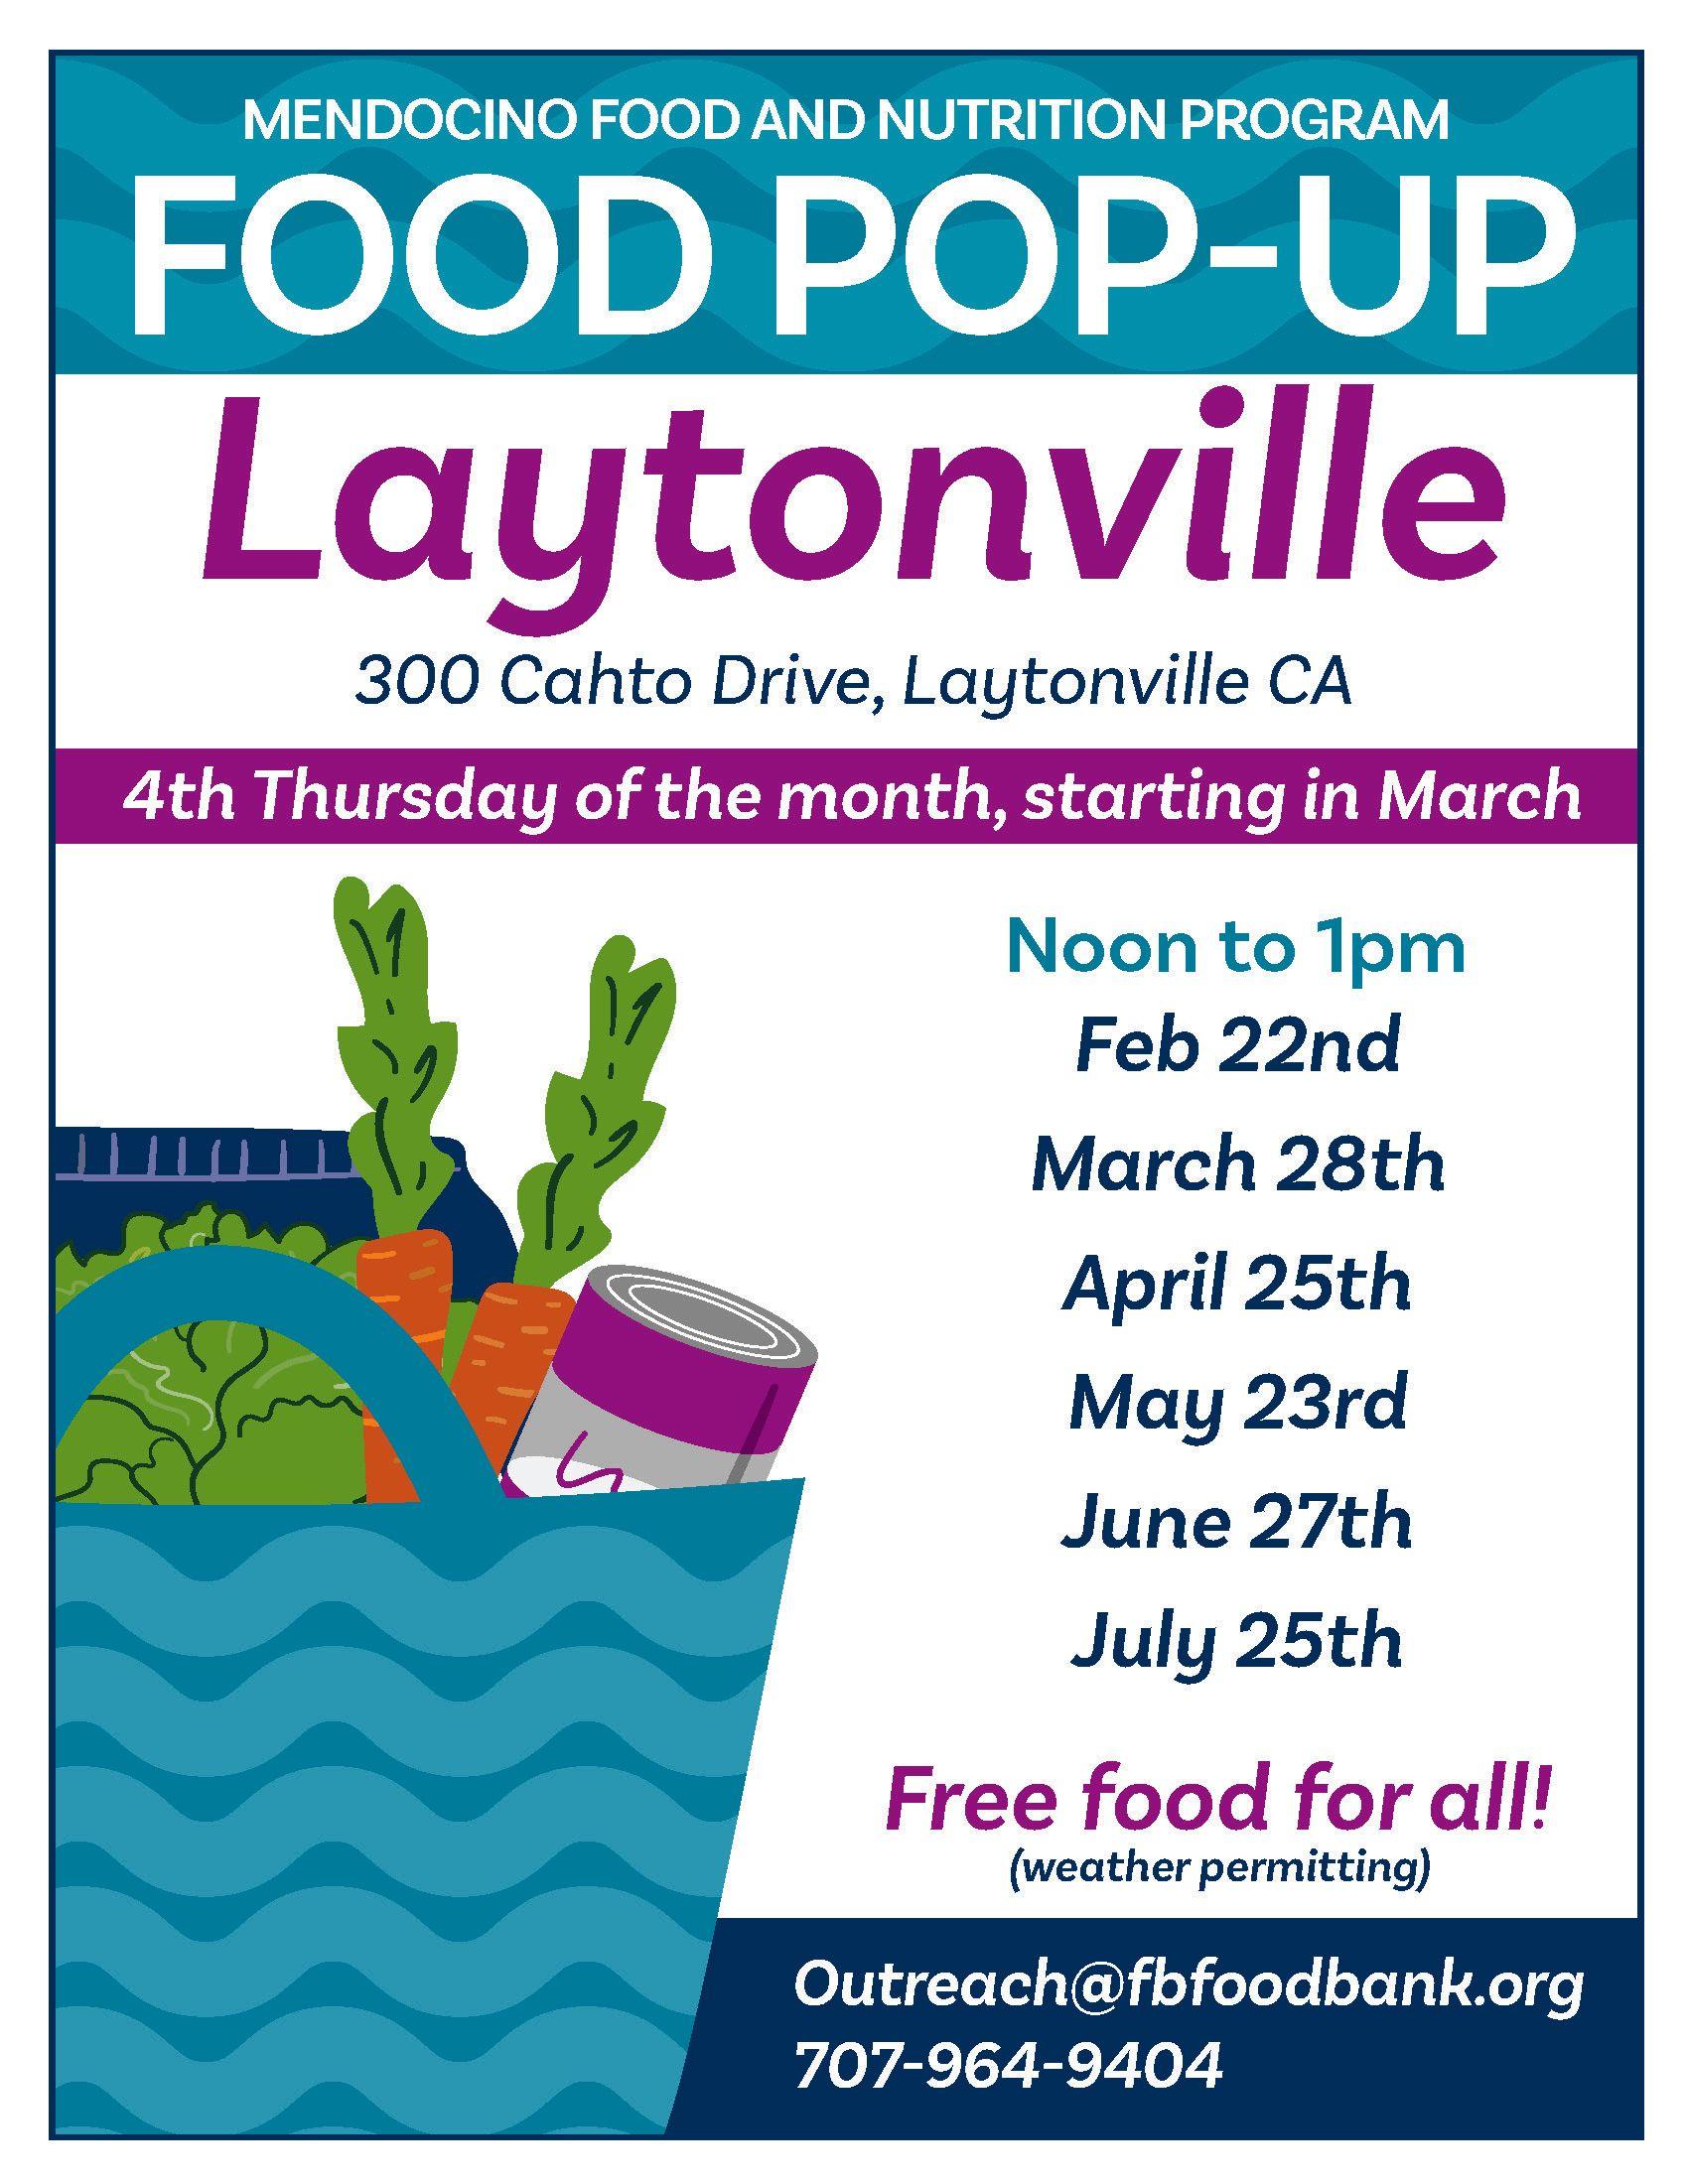 Food Pop-up Laytonville